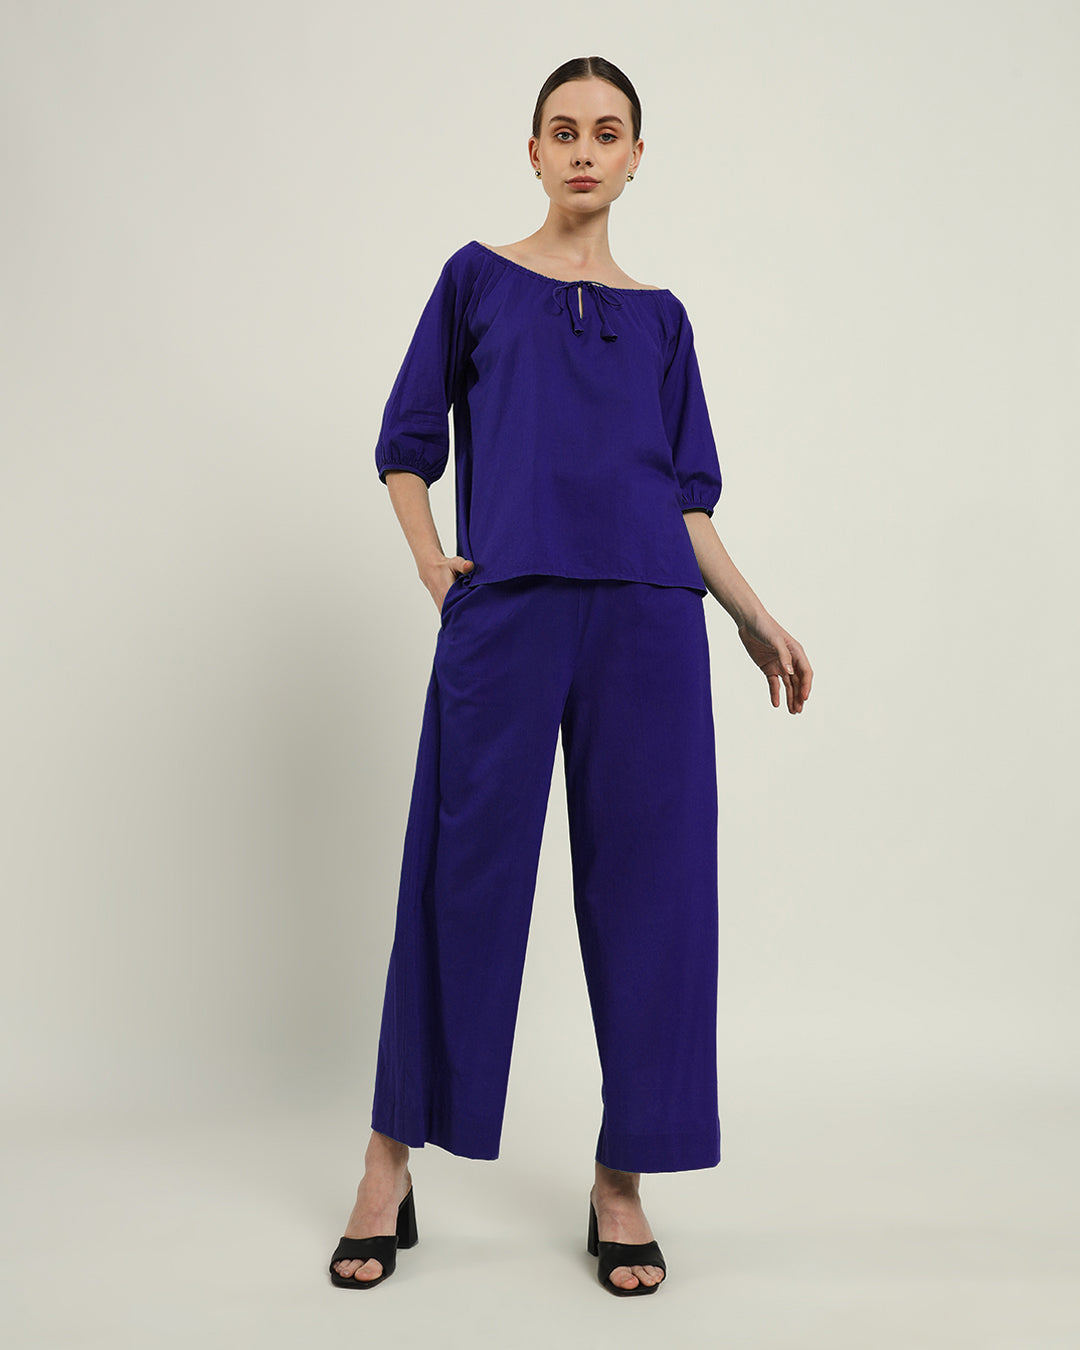 Pants Matching Set- Aurora Purple Effortless BowtNeck